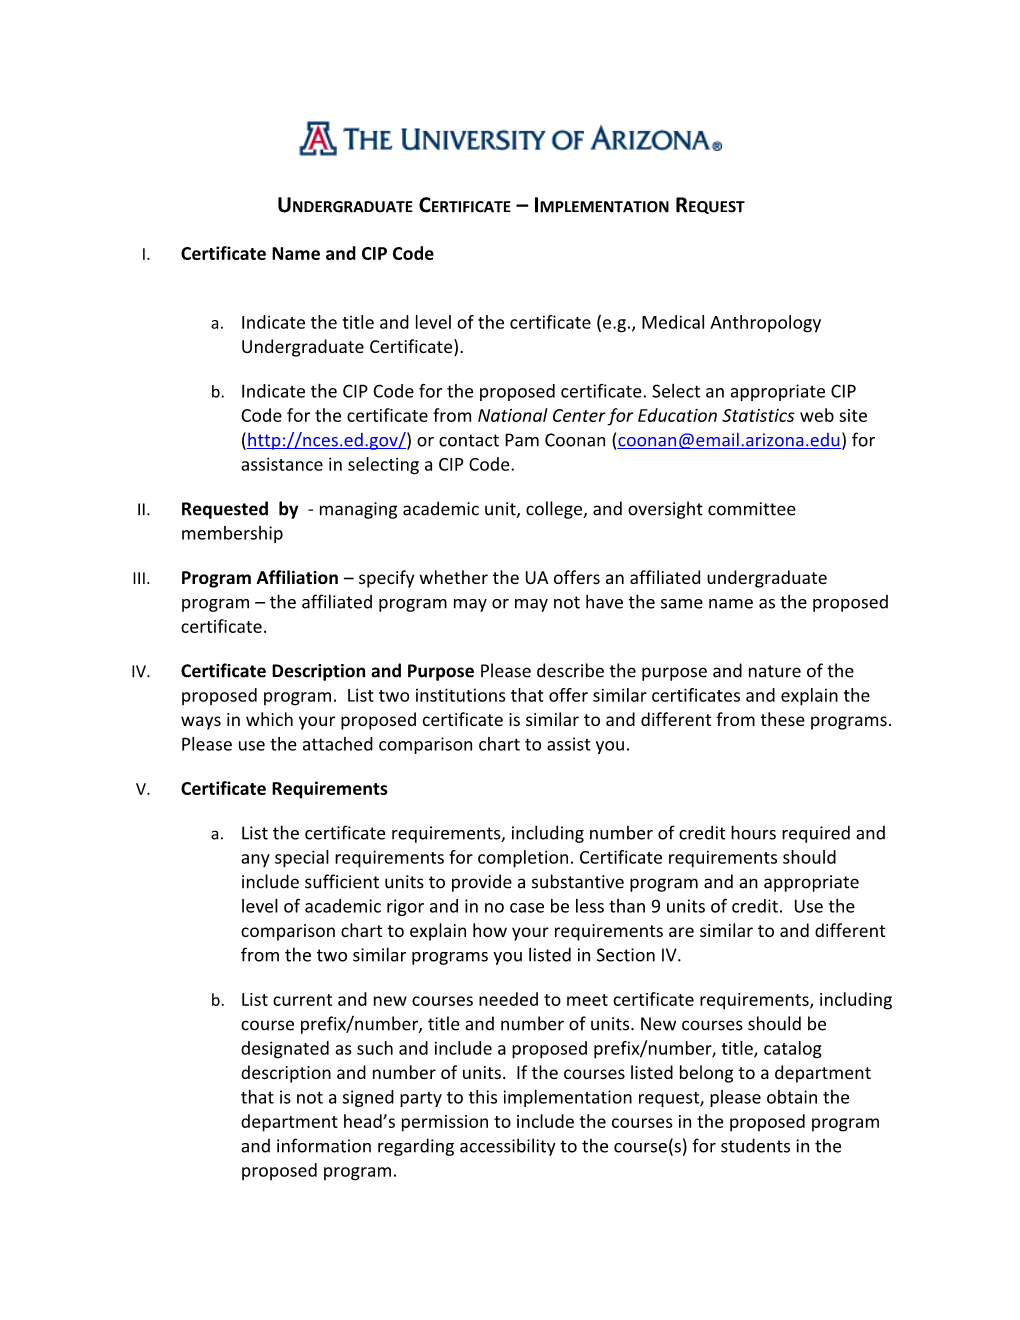 Undergraduate Certificate Implementation Request